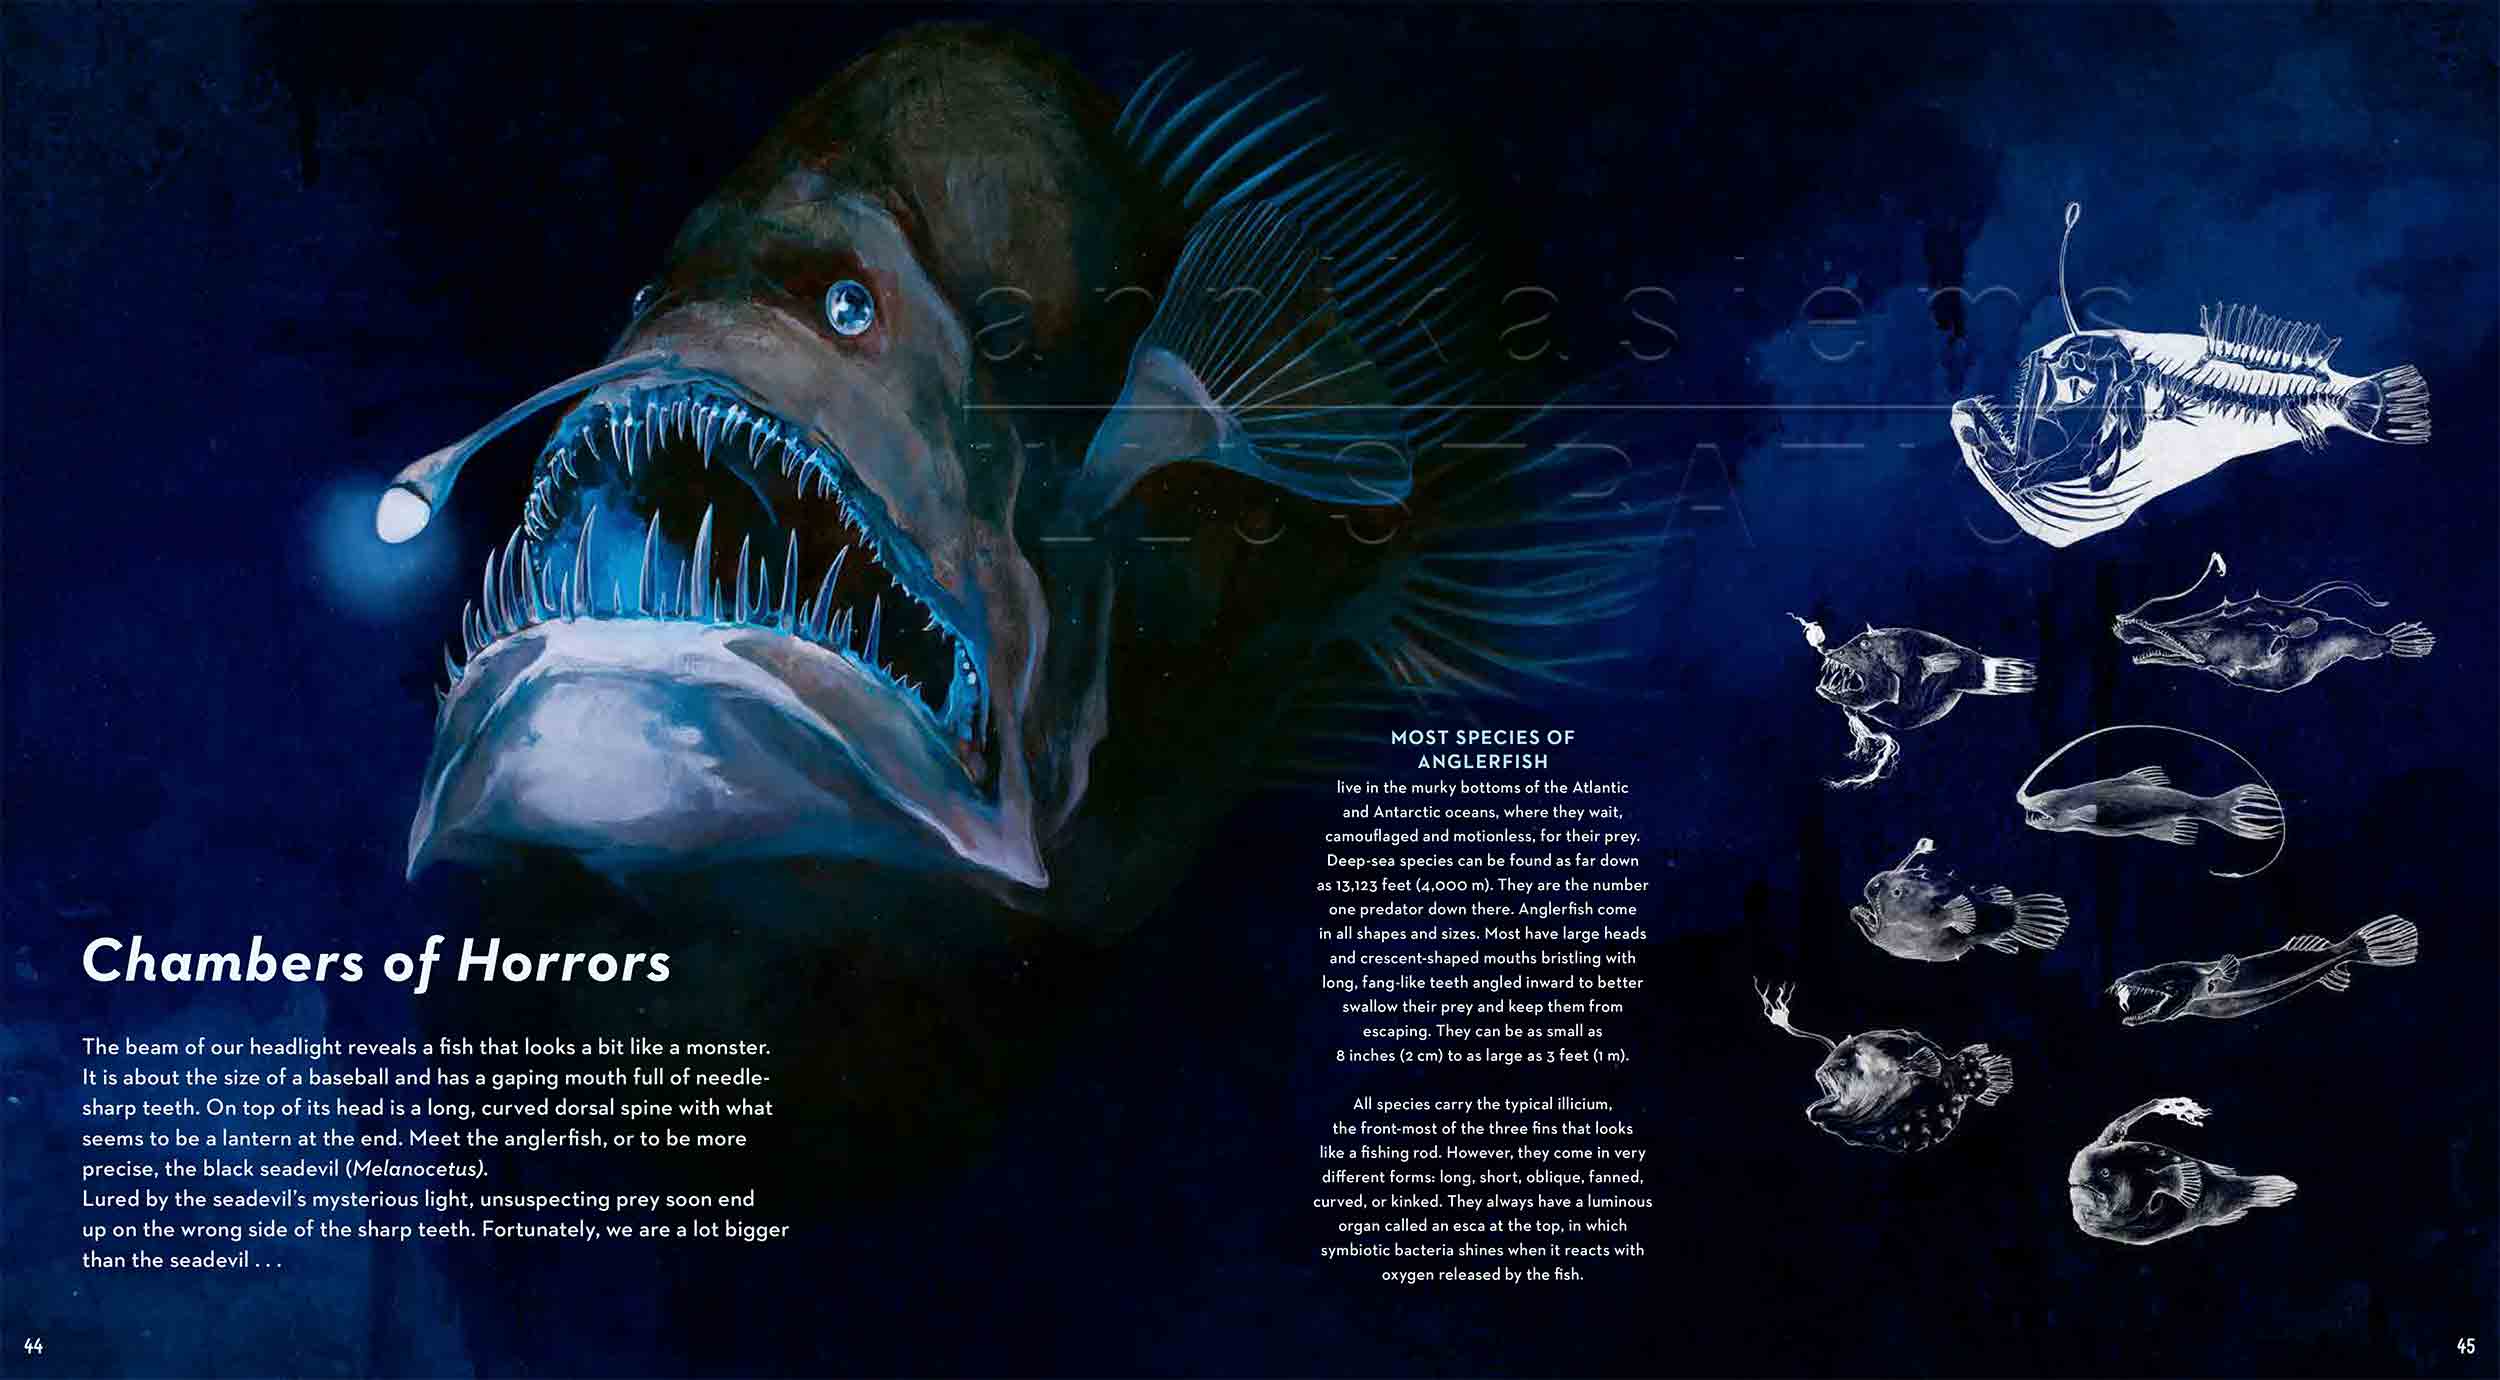 44-45-anglerfisch-lanternfish-Leuchtkalmar-fireflysquidfish-fish-deep-sea-Englisch-submersible-©annikasiems-plankton_deepsea-zooplankton.jpg